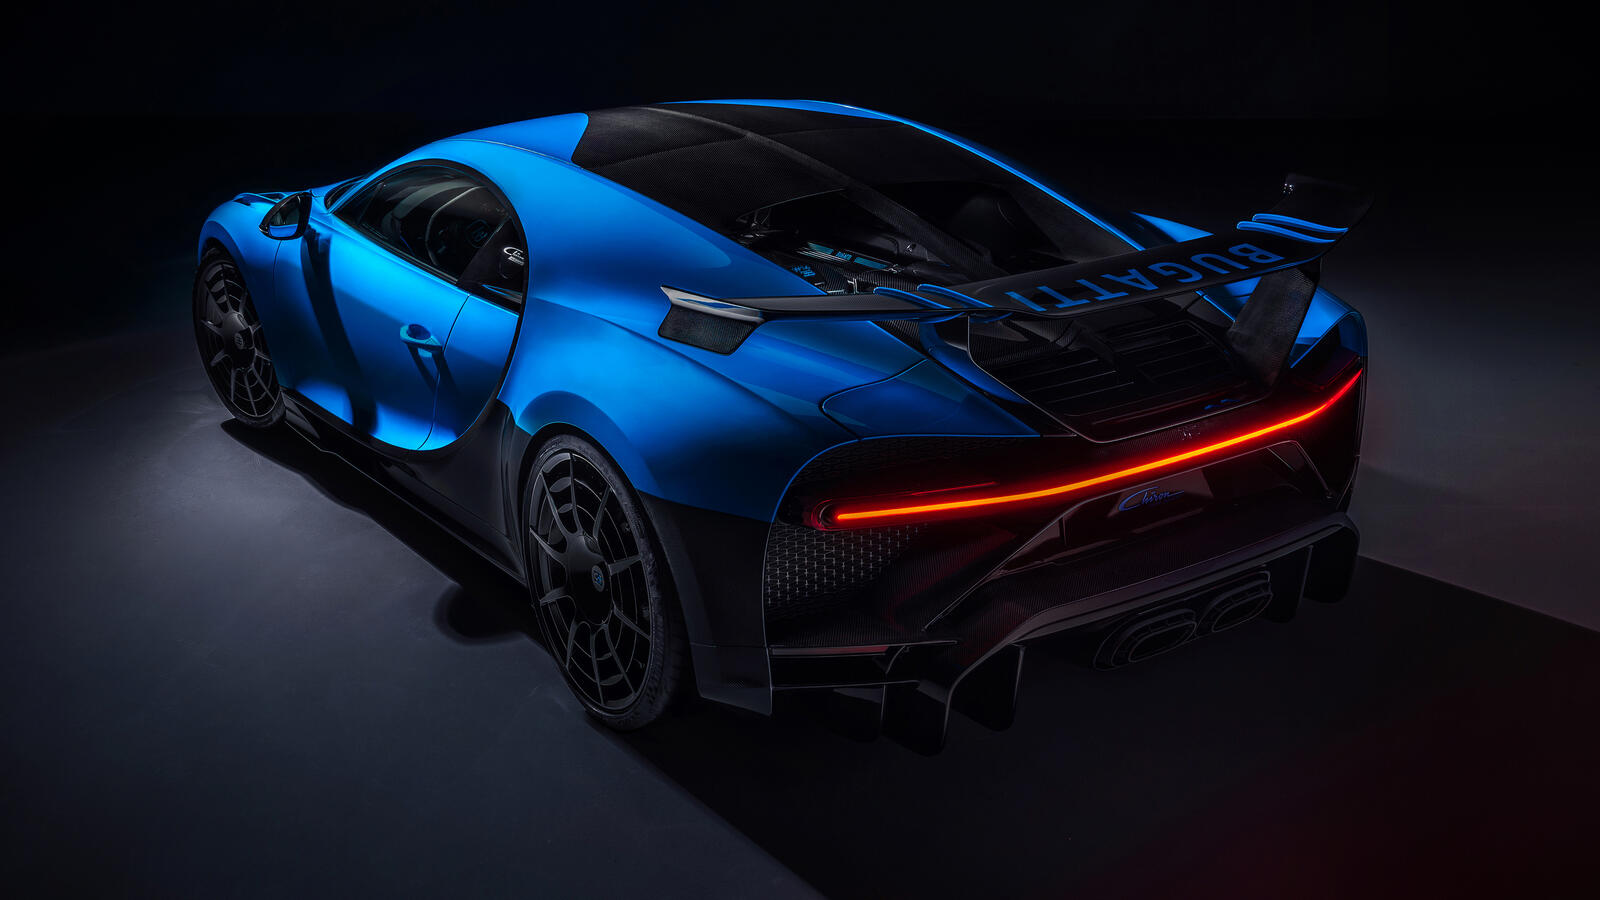 Free photo Bugatti chiron pur sport 2020 in blue rear view